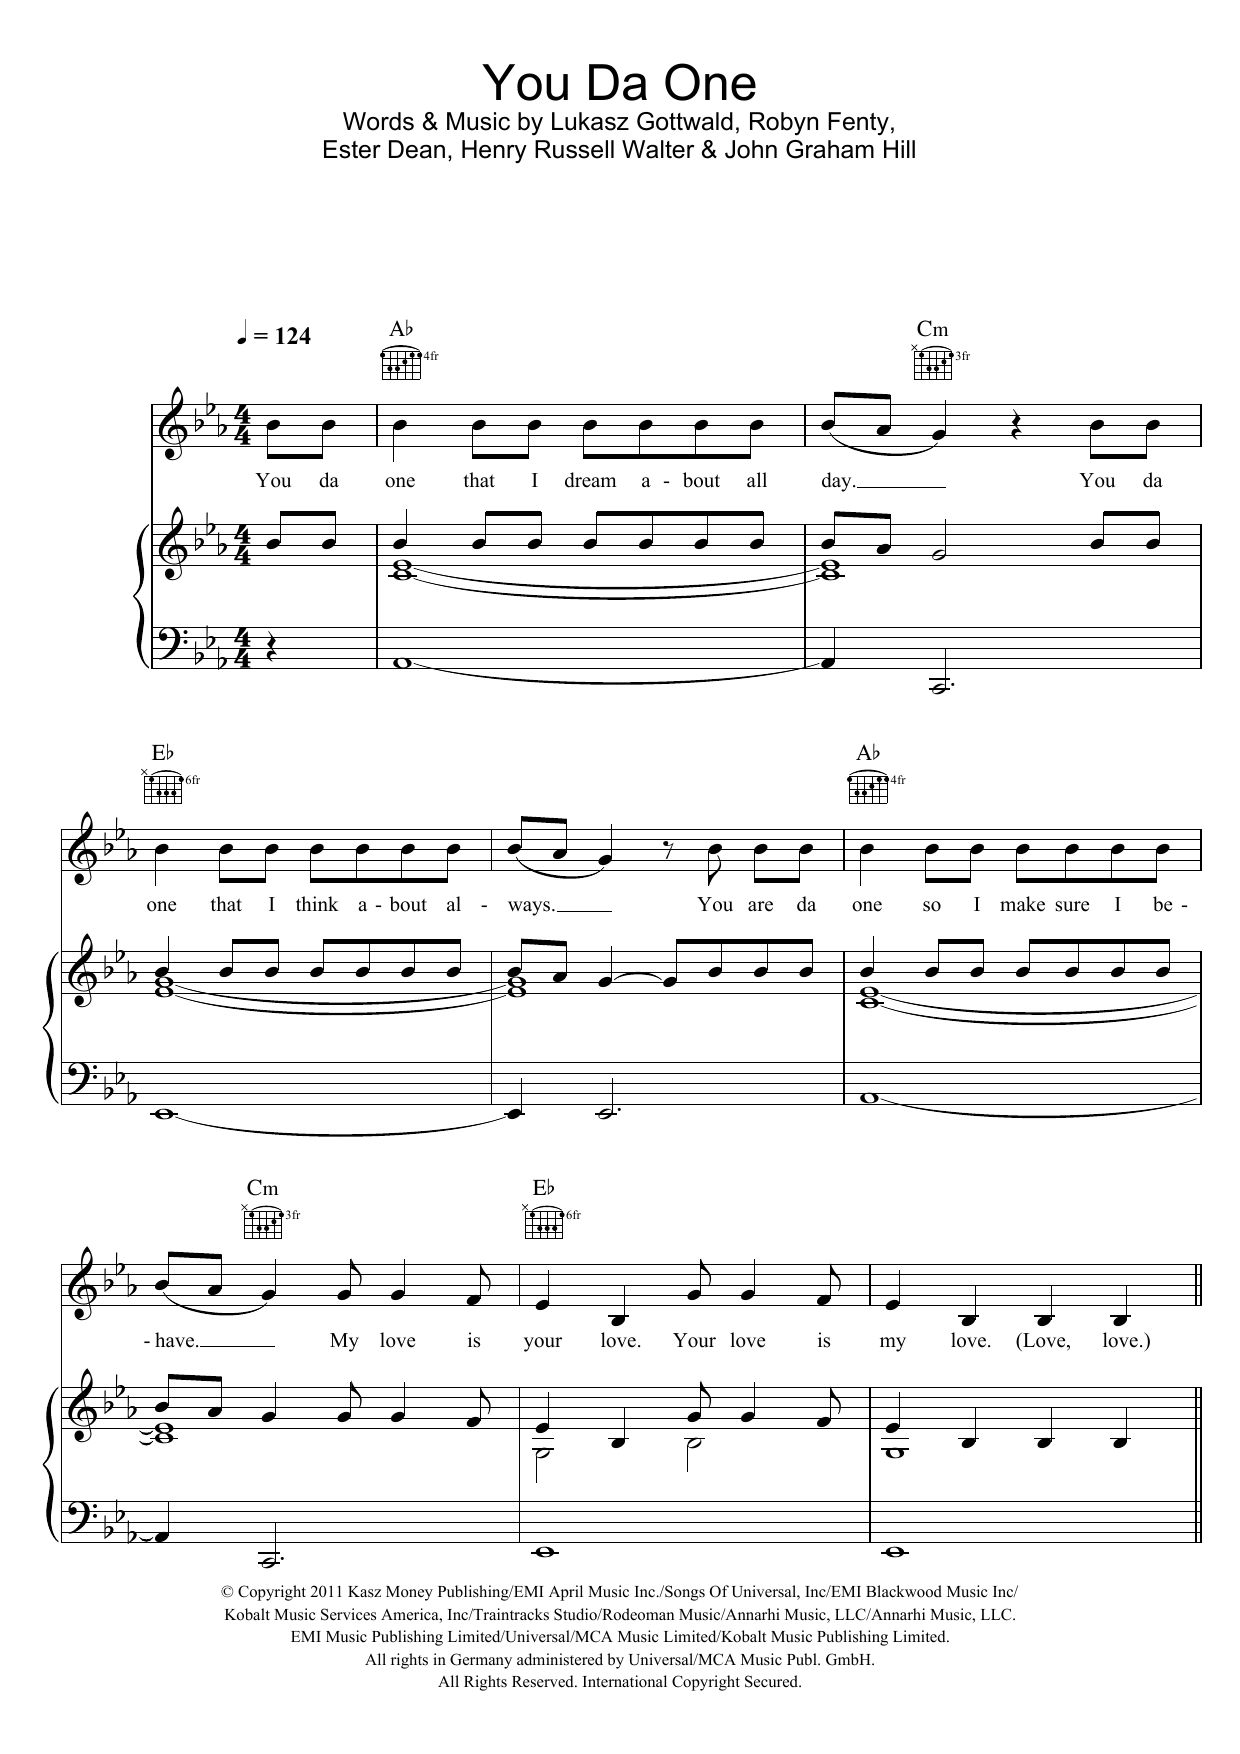 Rihanna You Da One sheet music notes and chords arranged for Piano, Vocal & Guitar Chords